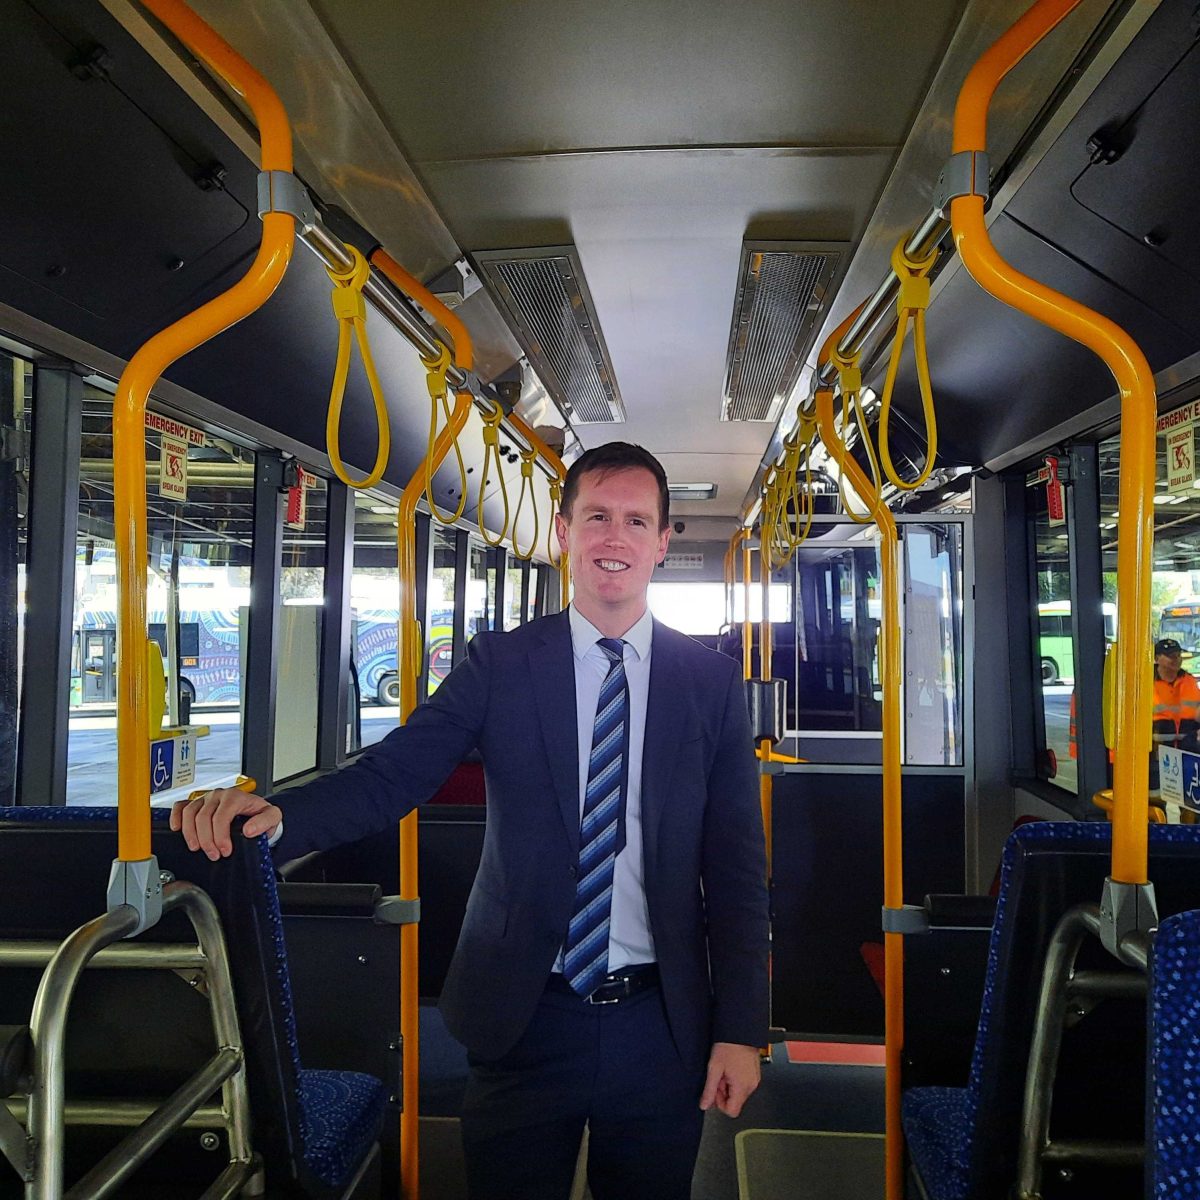 man on bus